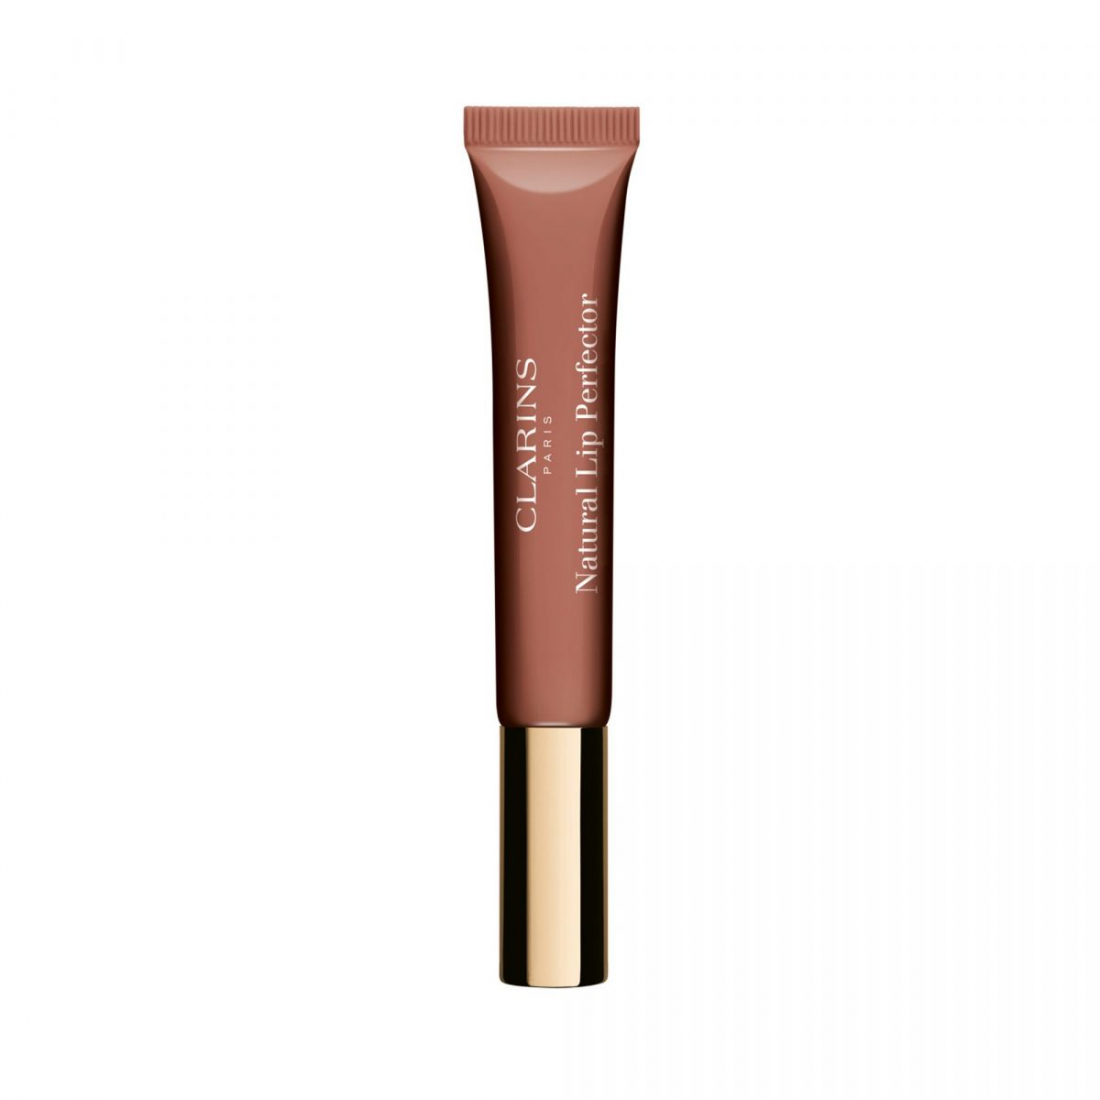 'Eclat Minute Embellisseur Lèvres' Lip Gloss - 06 Rosewood Shimmer 12 ml